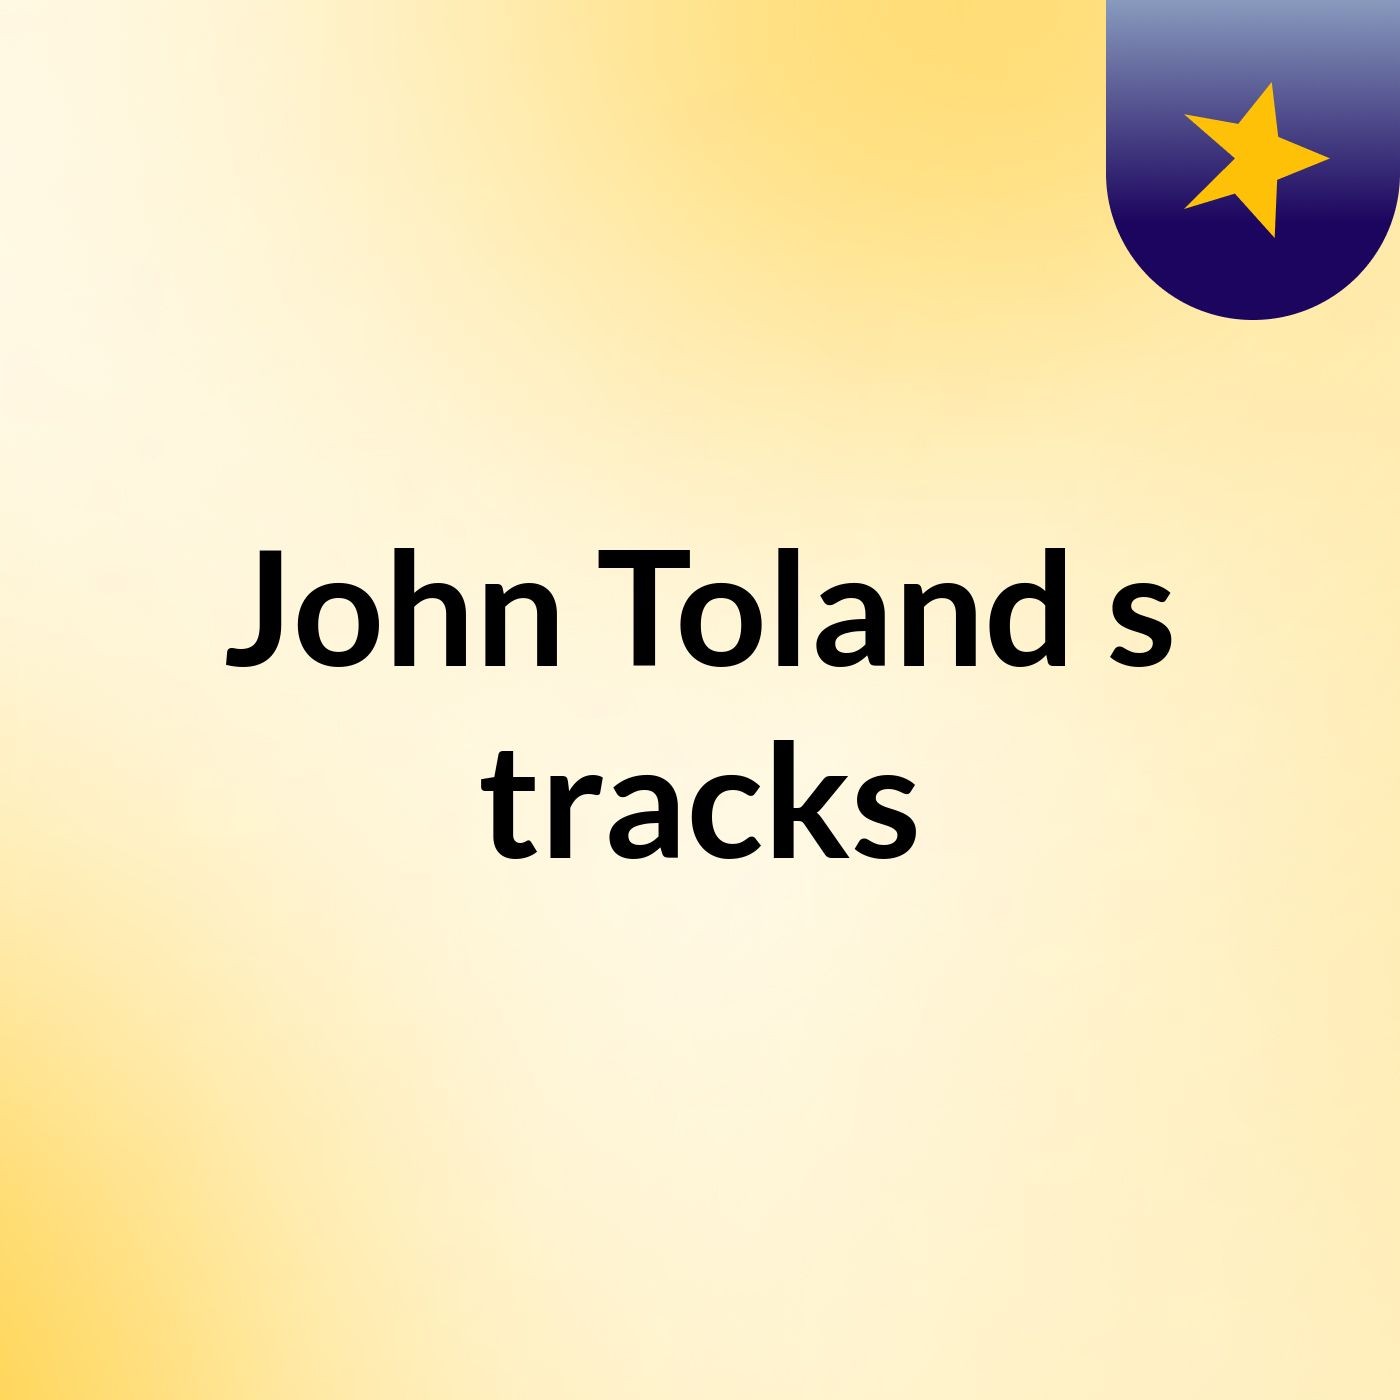 John Toland's tracks